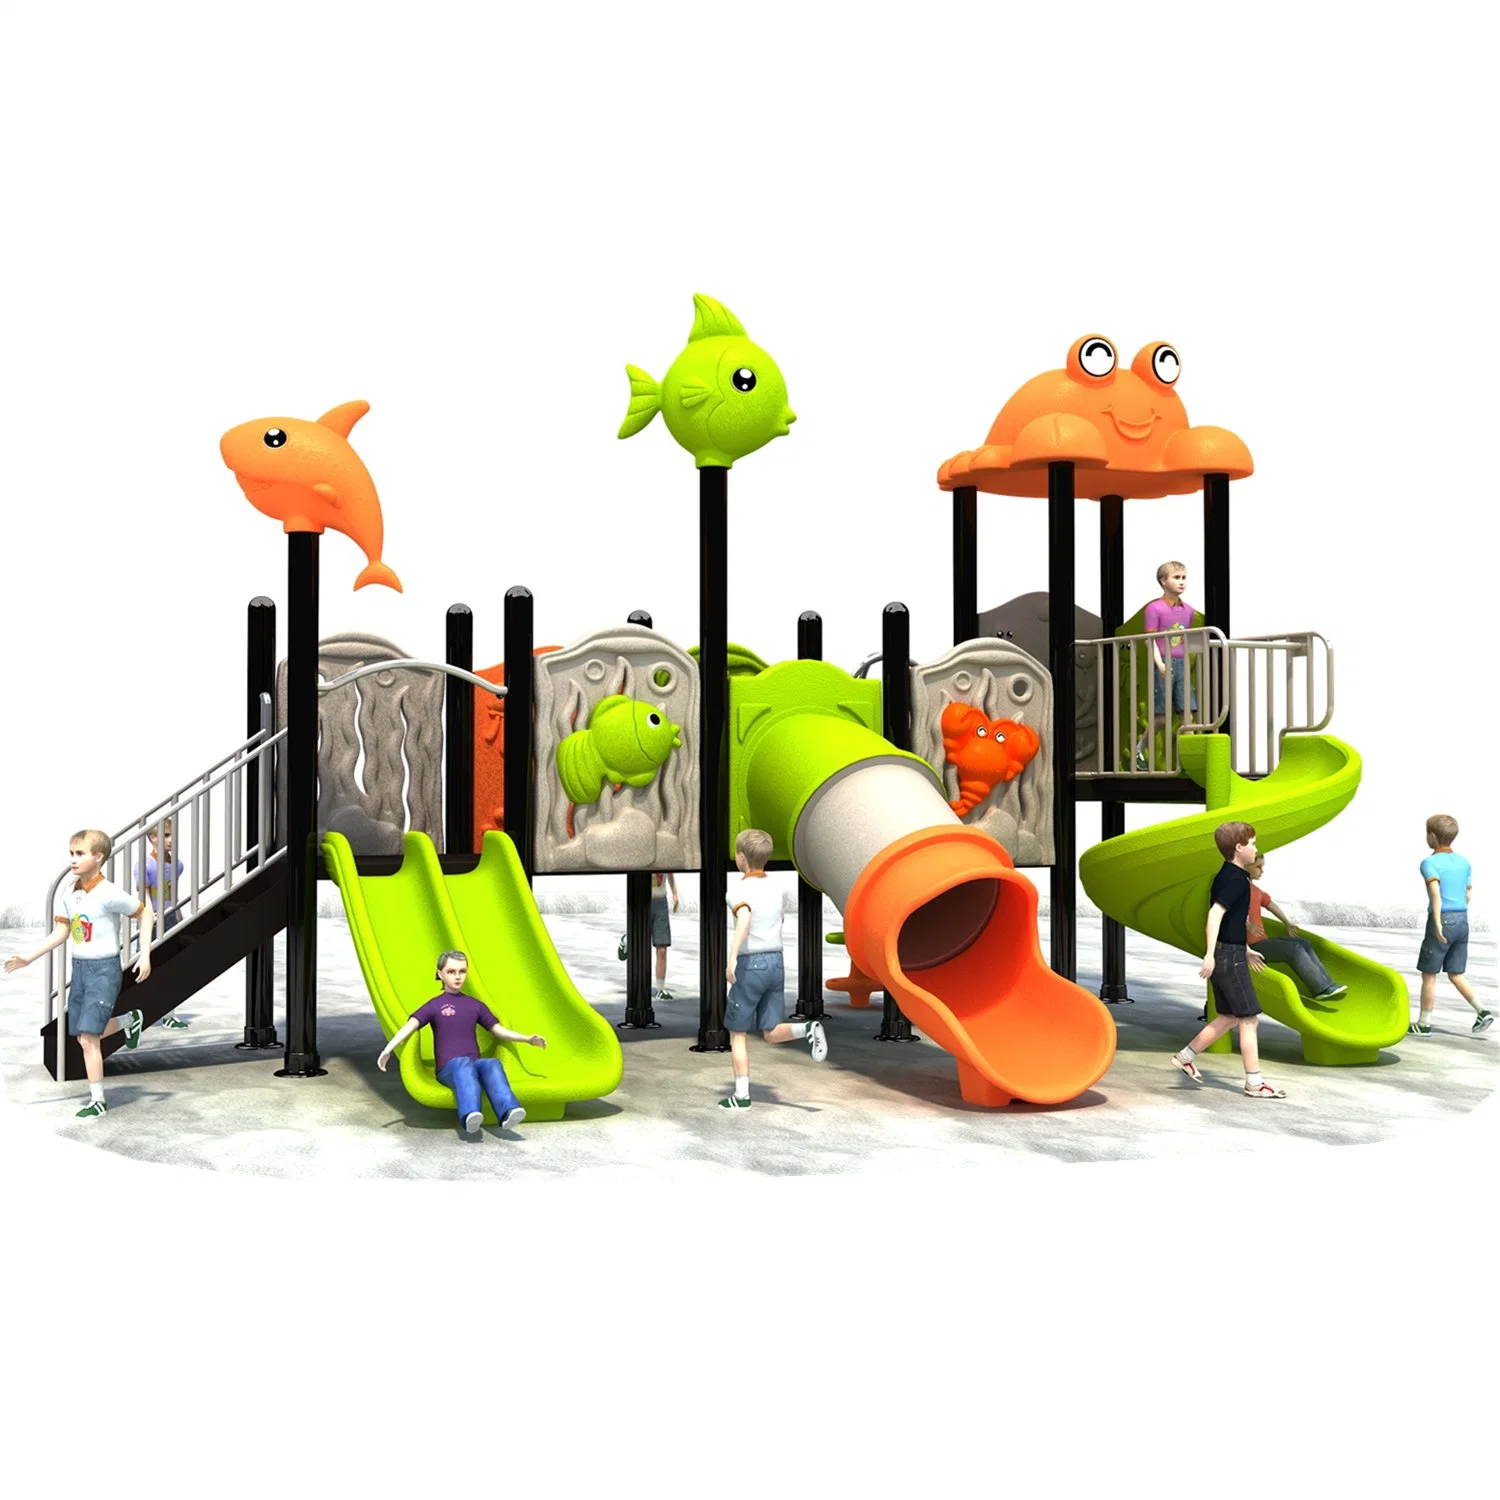 Children's Playground Large Plastic Slide Toys Outdoor Play Equipment